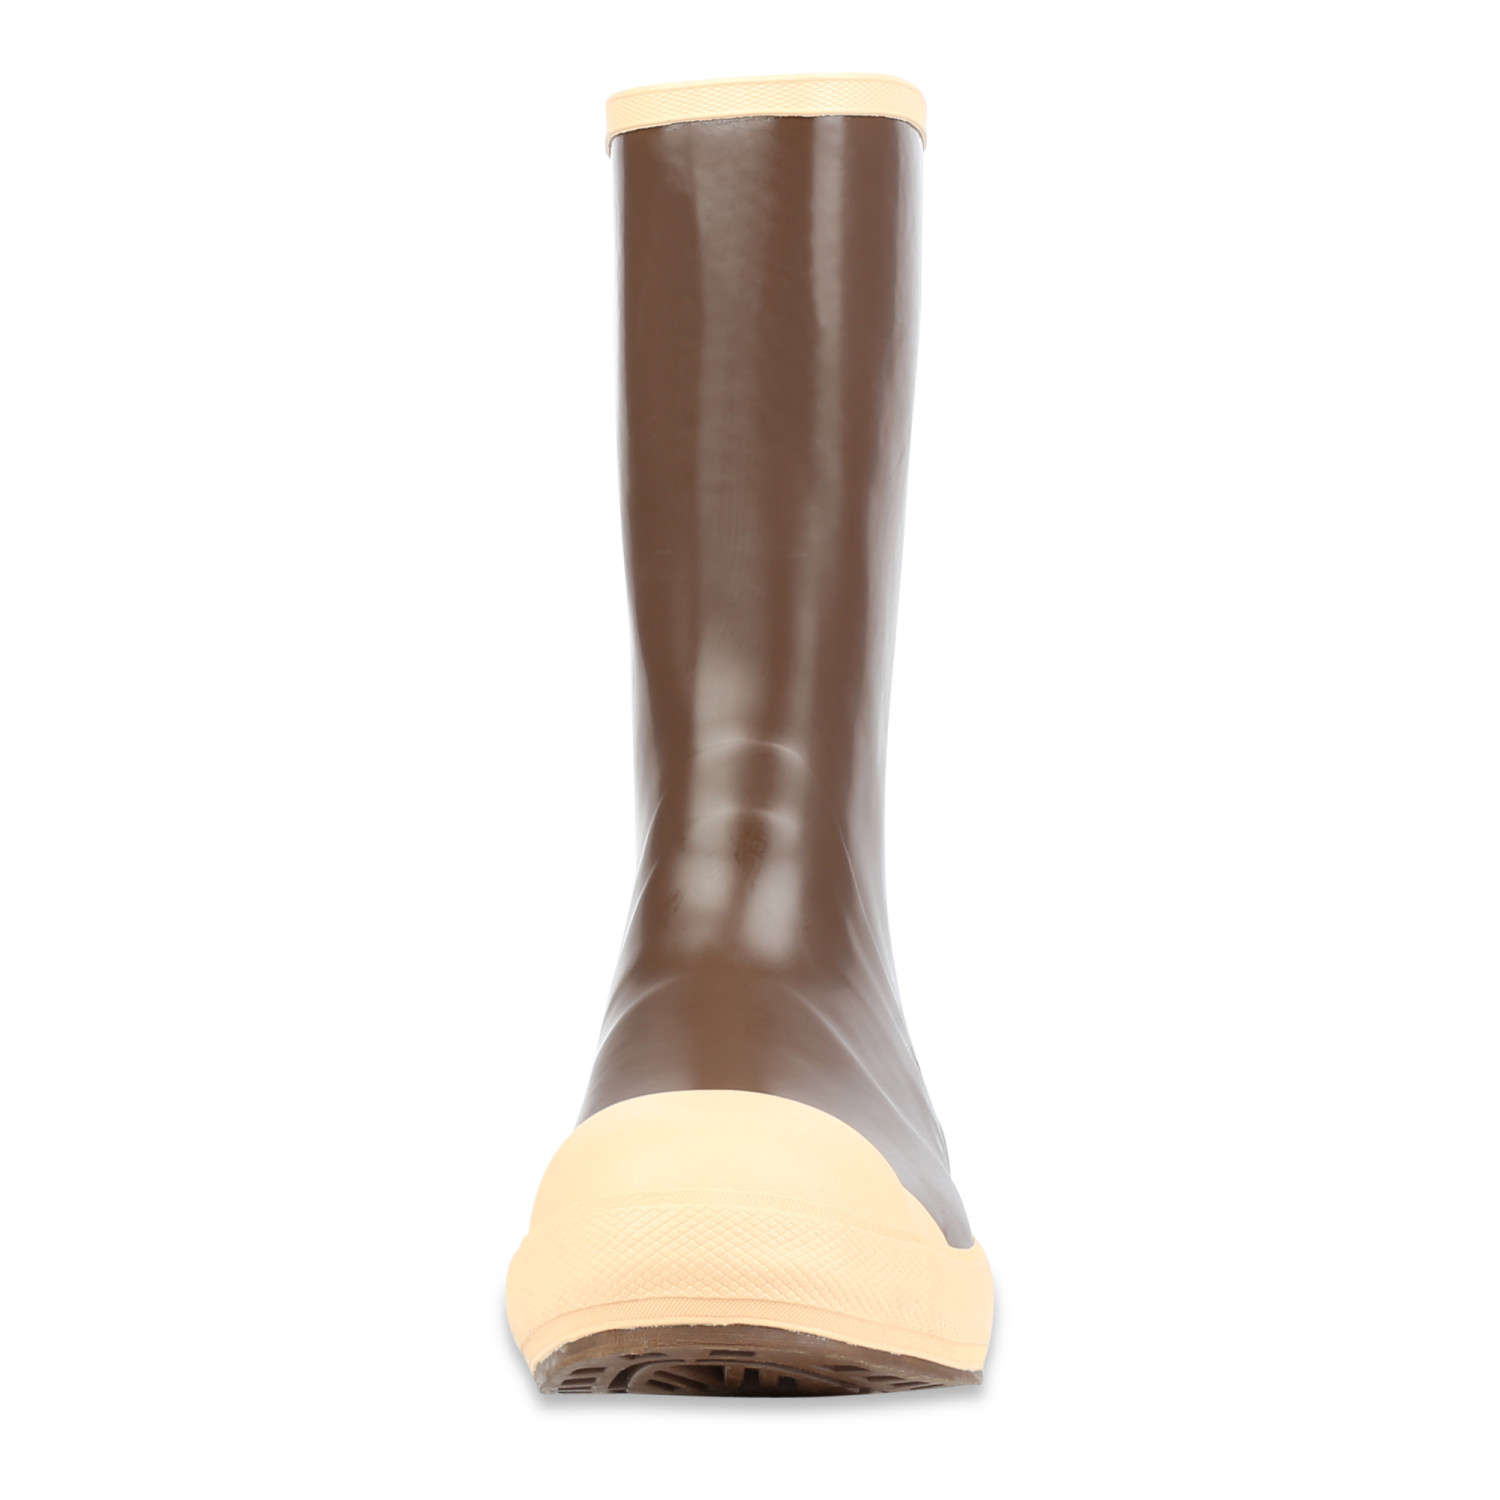 Servus 12 in Steel Toe Neoprene Safety Boot Size 12(M) - image 2 of 6